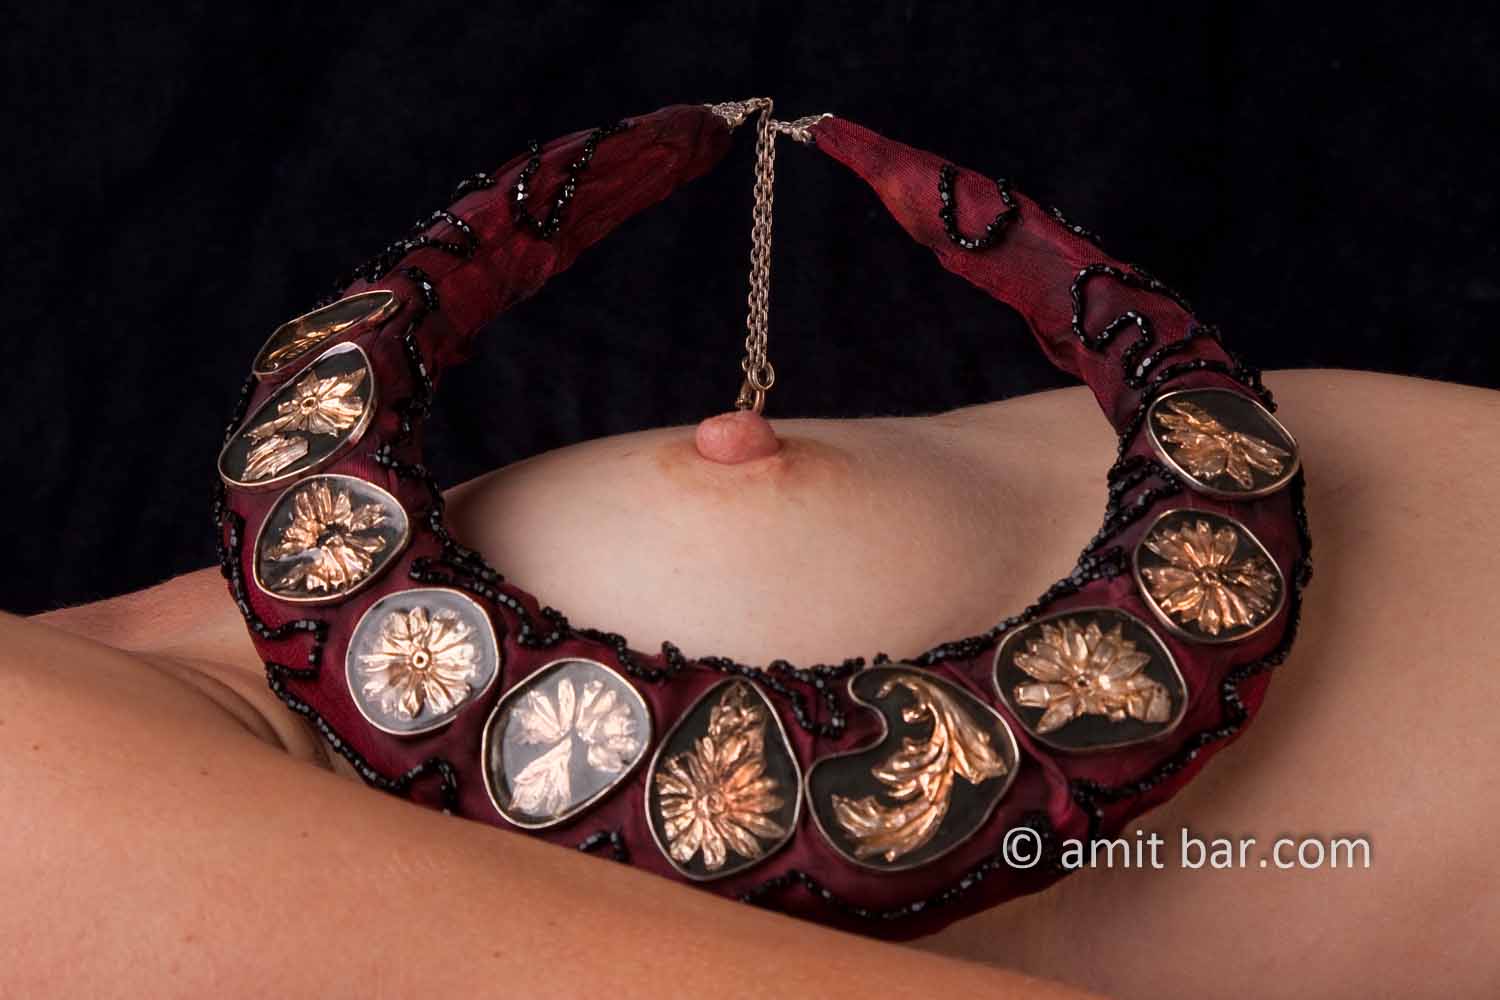 Nude jewelery II: Necklace on breast